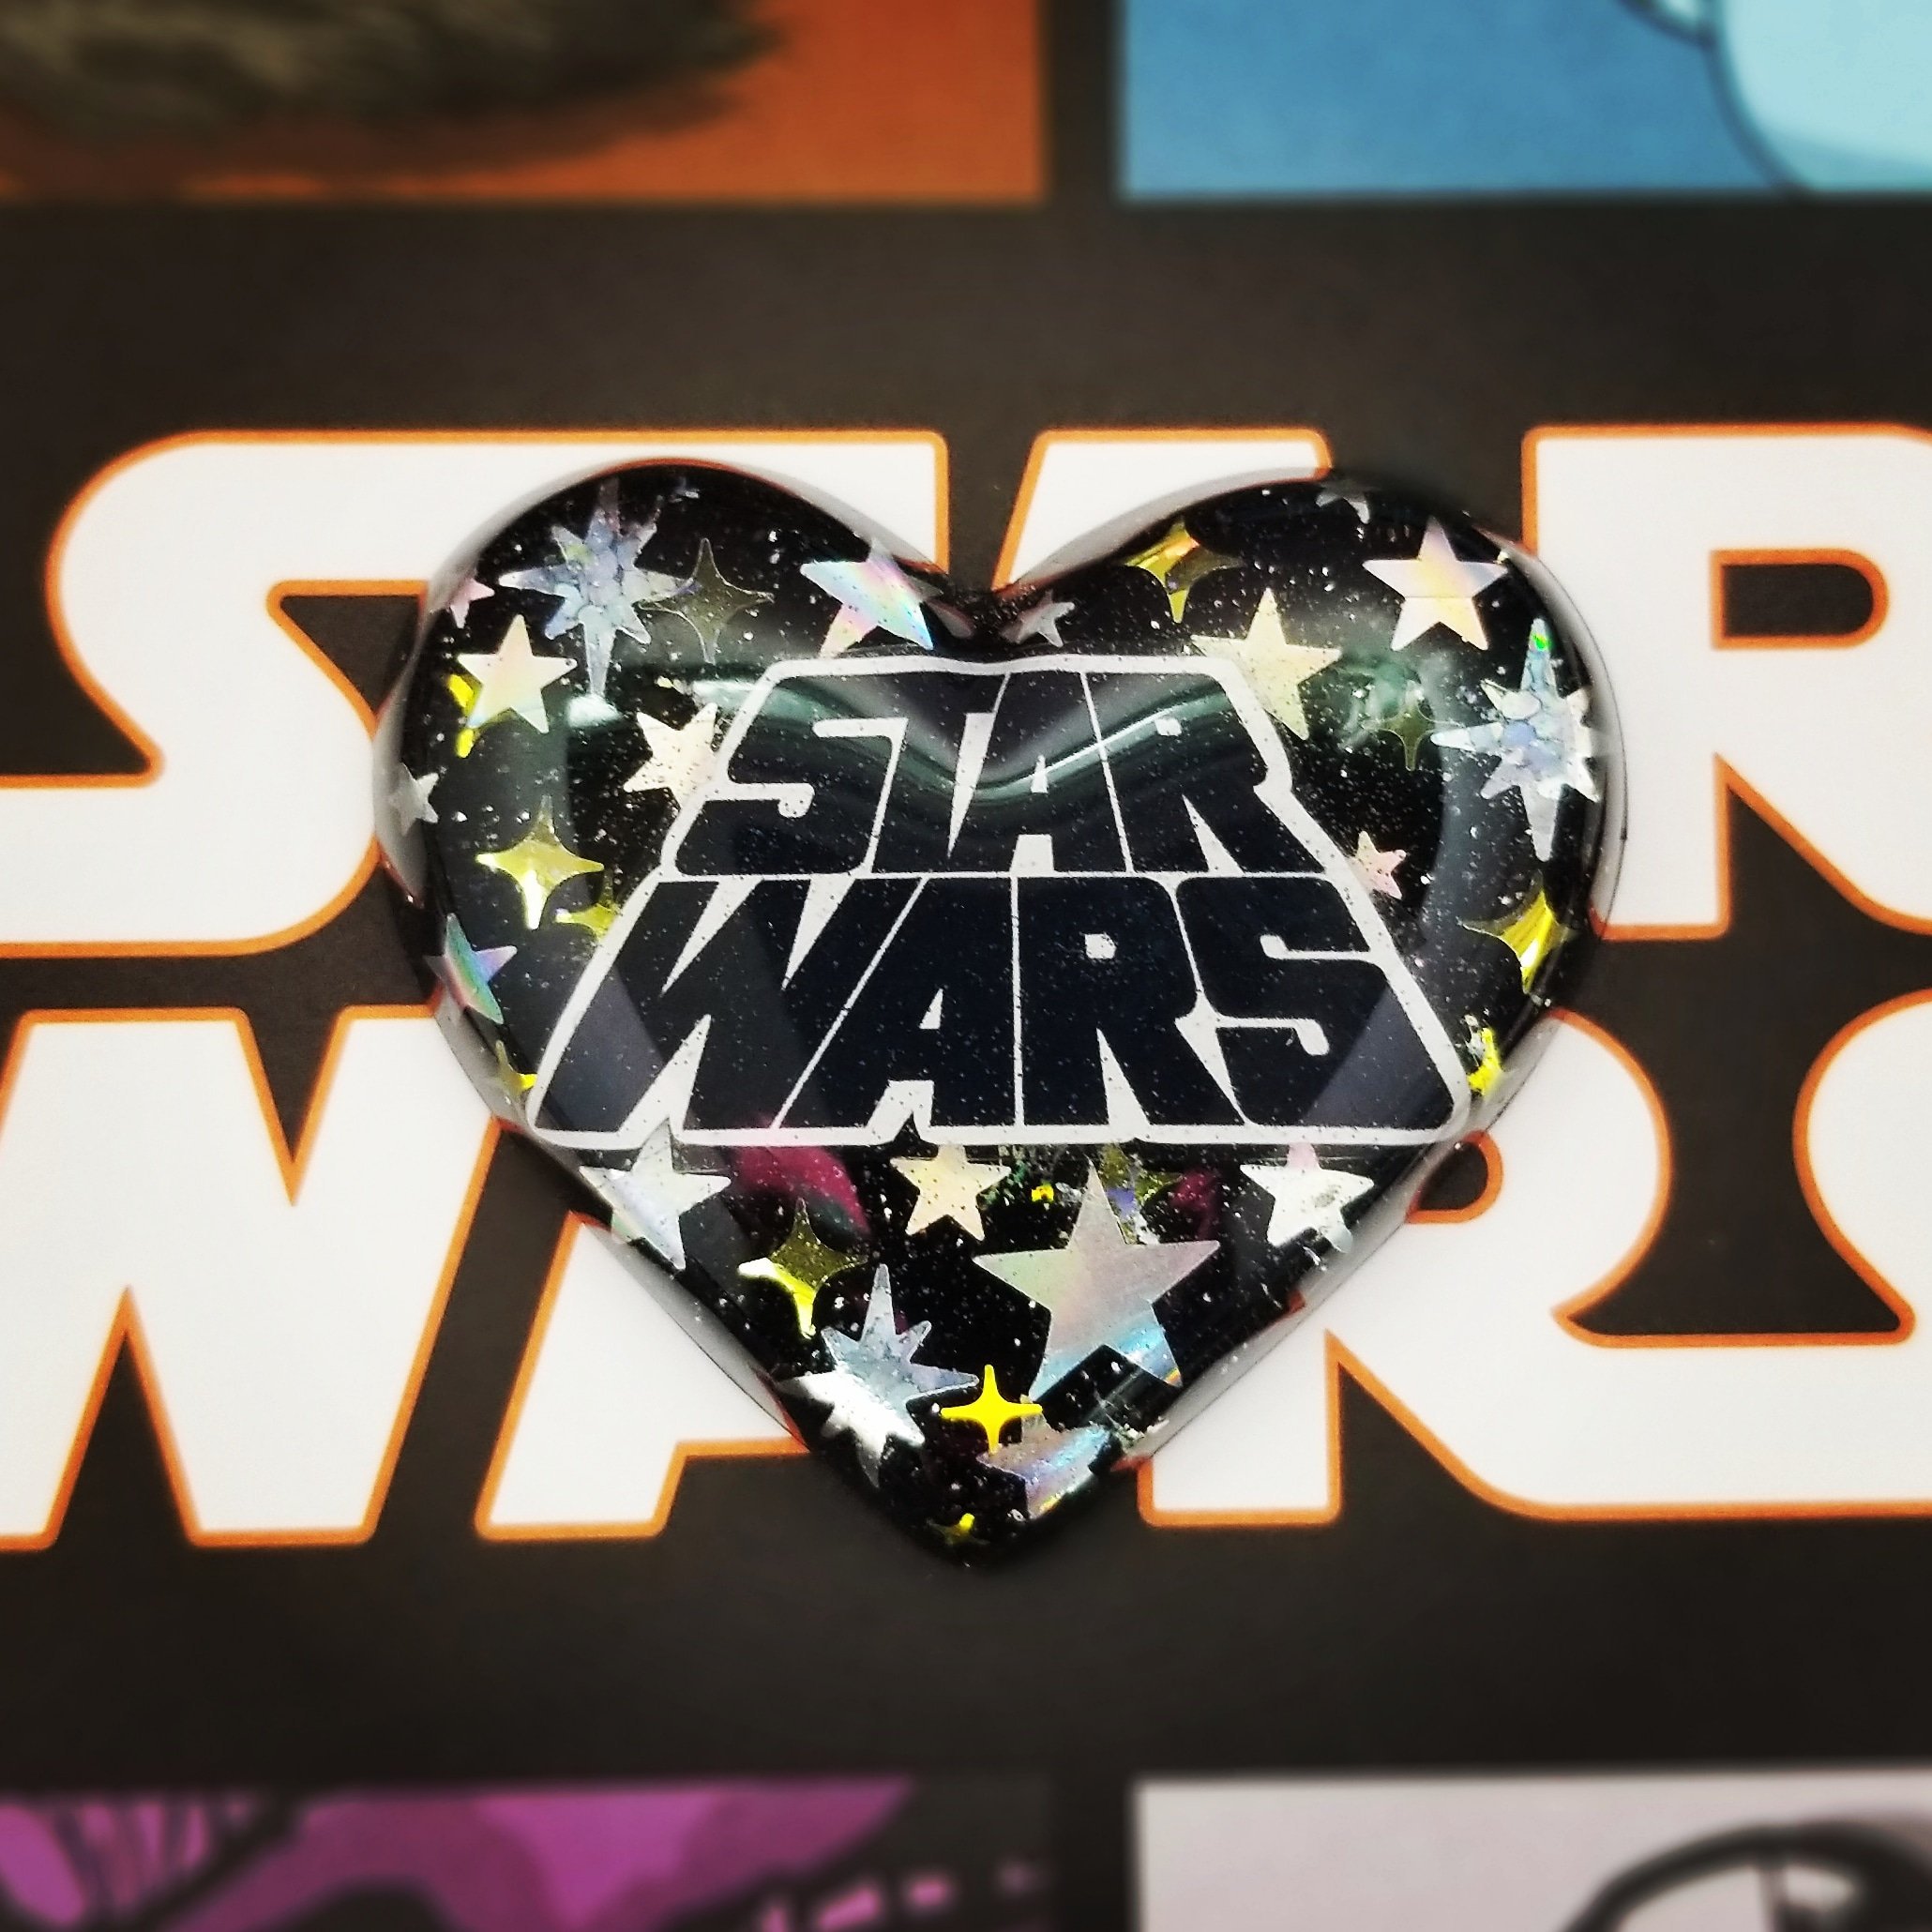 Star Wars Heart Shaped Necklace by Etsy Seller PBnJewelsBoutique